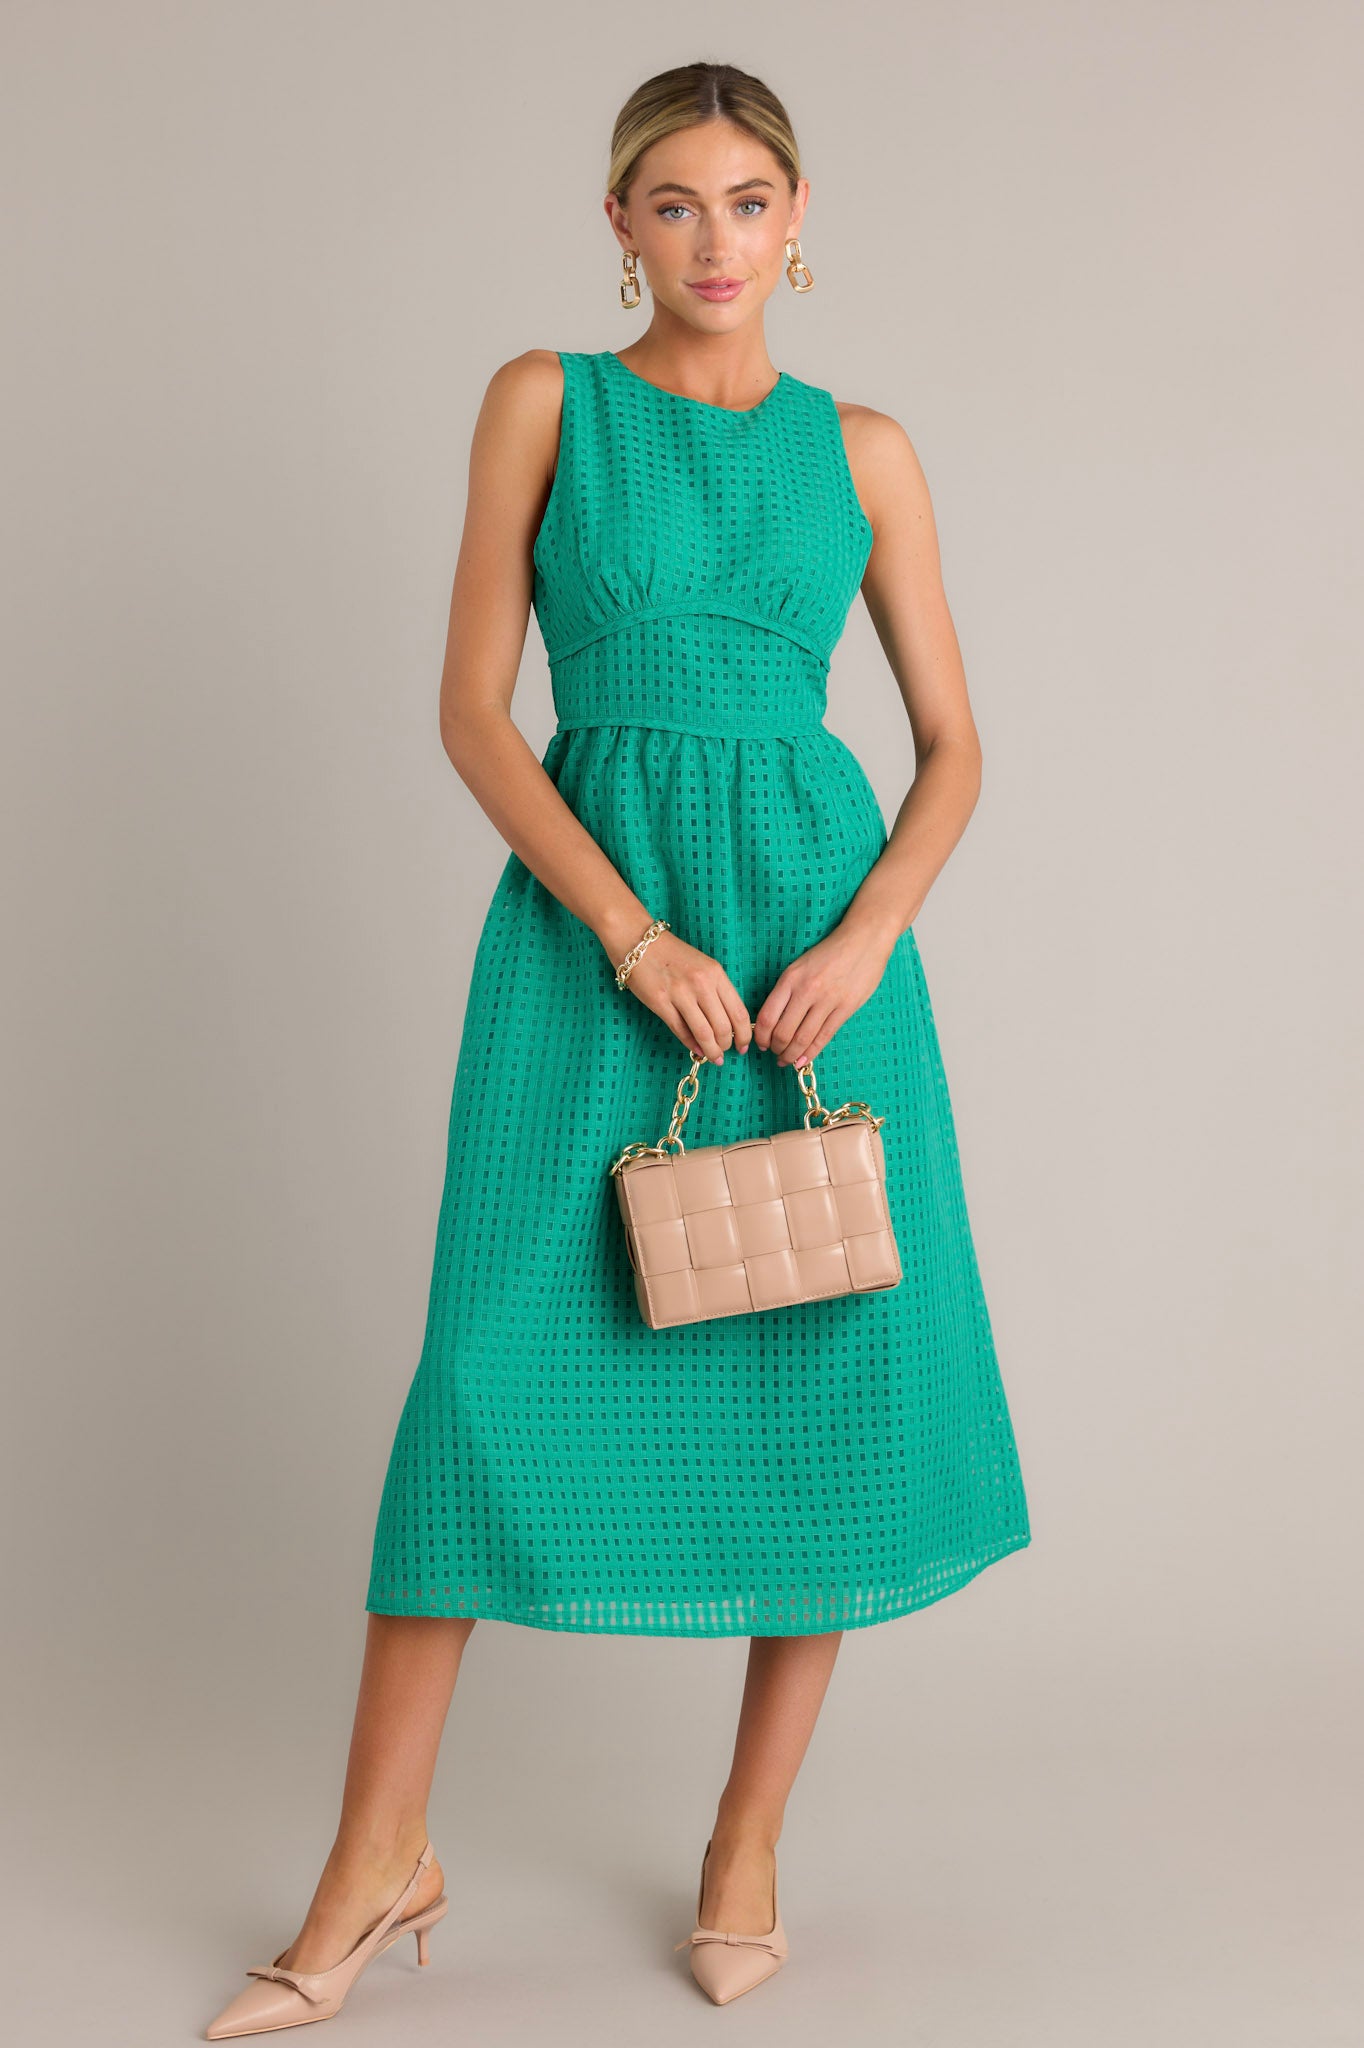 This green midi dress features a high neckline, a discrete back zipper, a thick waistband, a grid-like pattern, and a sleeveless design.